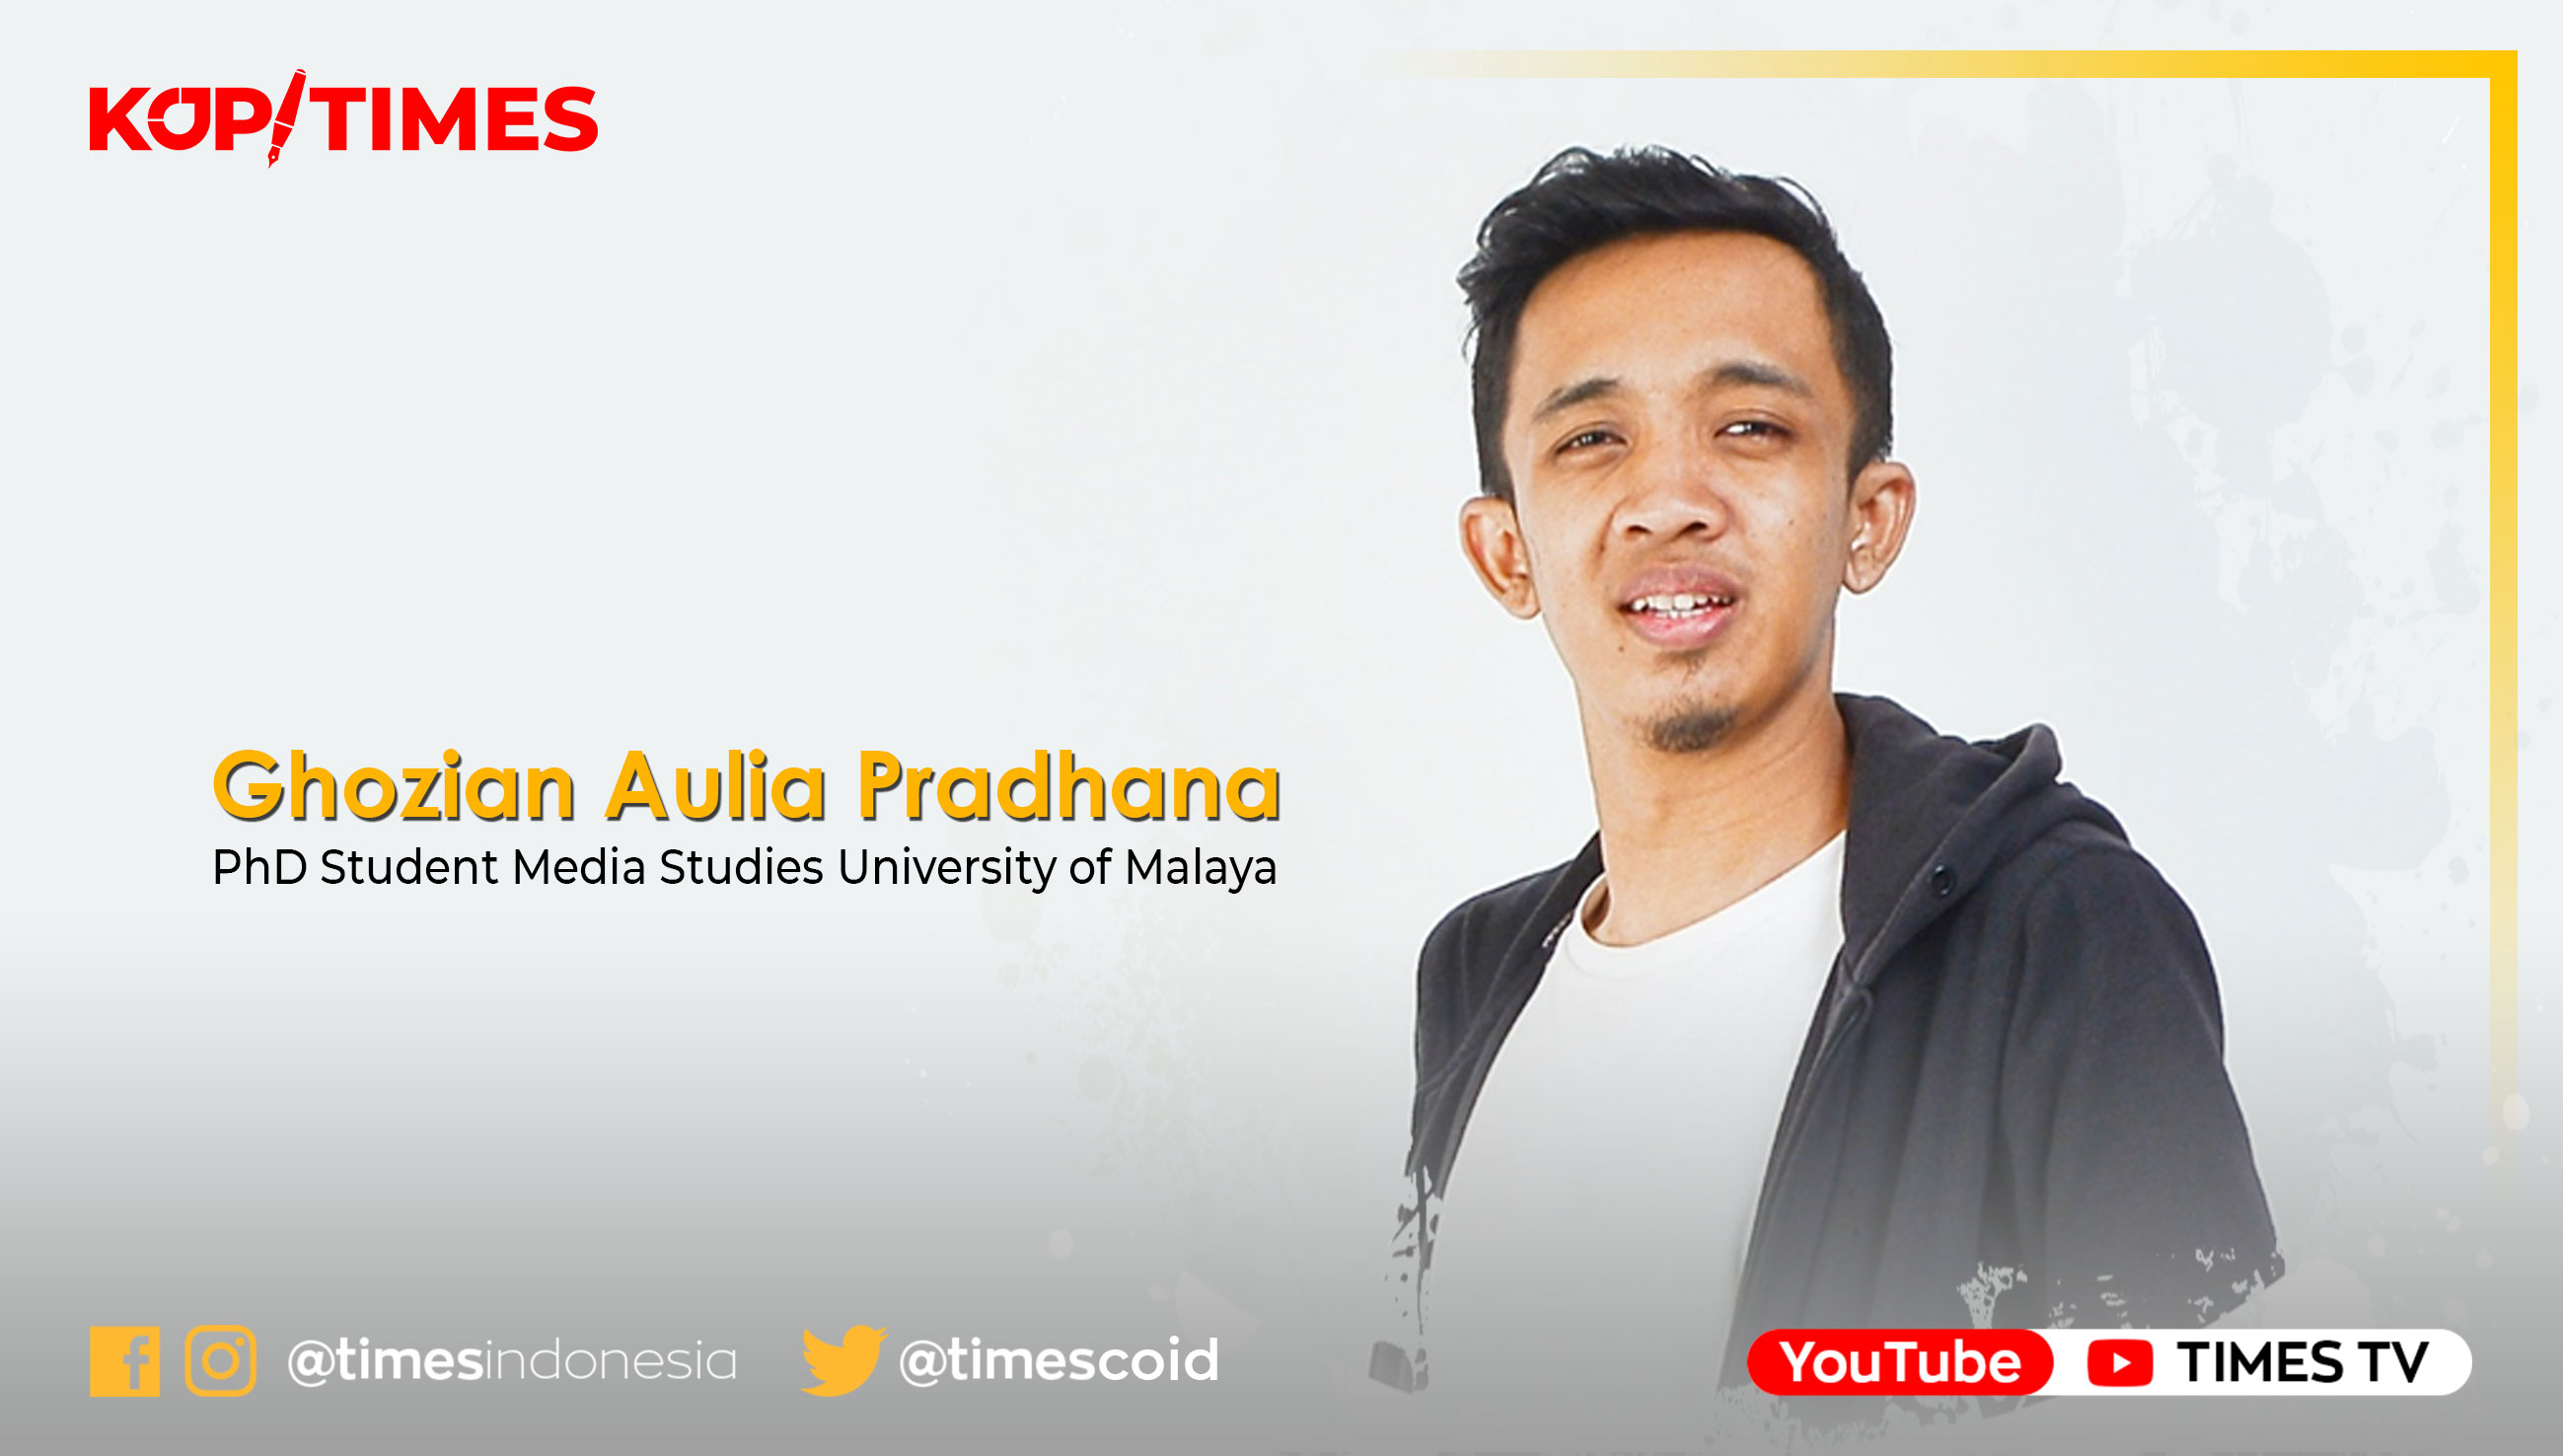 Ghozian Aulia Pradhana, PhD Student Media Studies, University of Malaya.